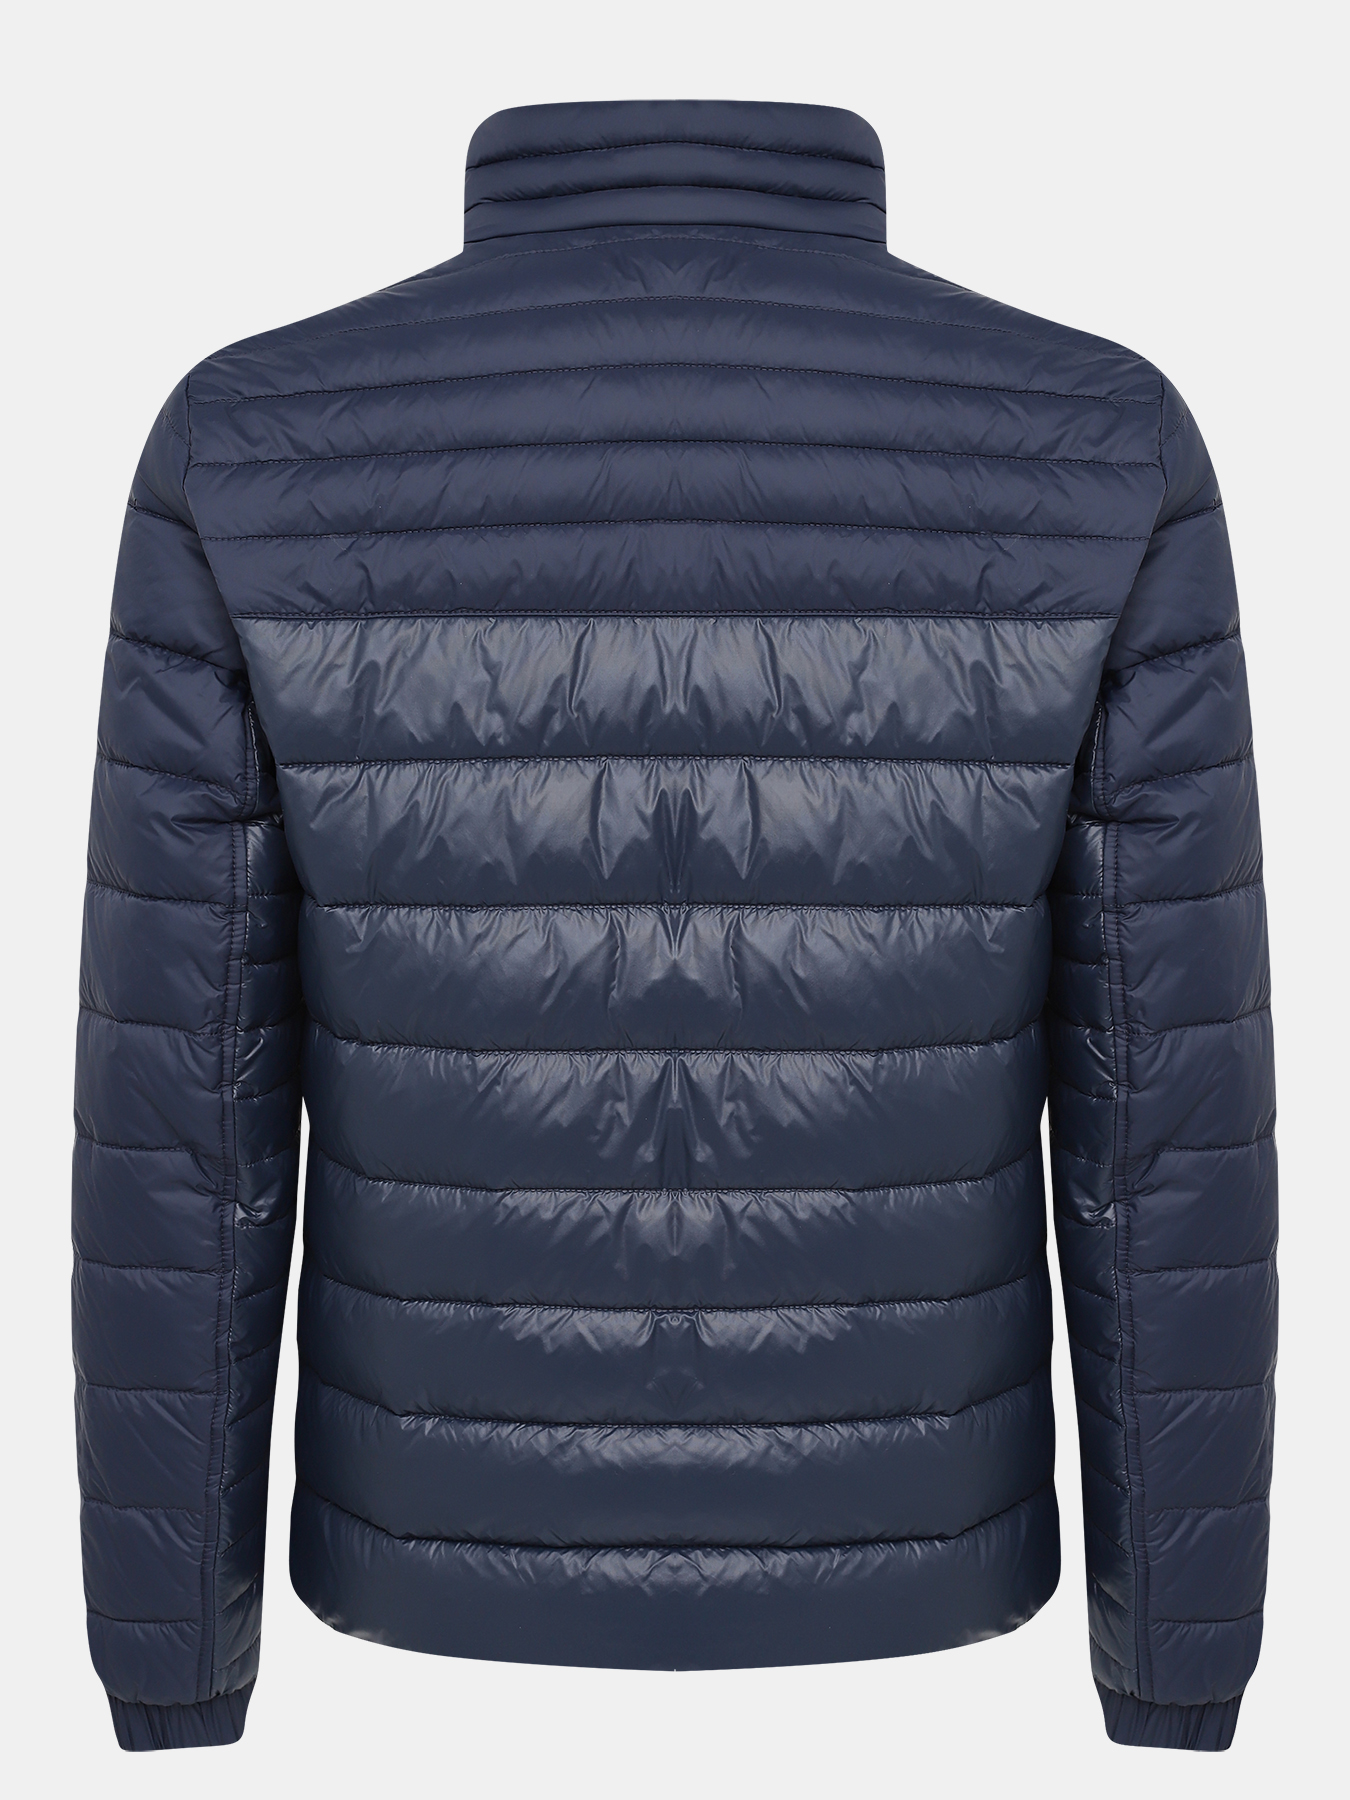 Куртка Oden BOSS 434079-026, цвет темно-синий, размер 50 - фото 5